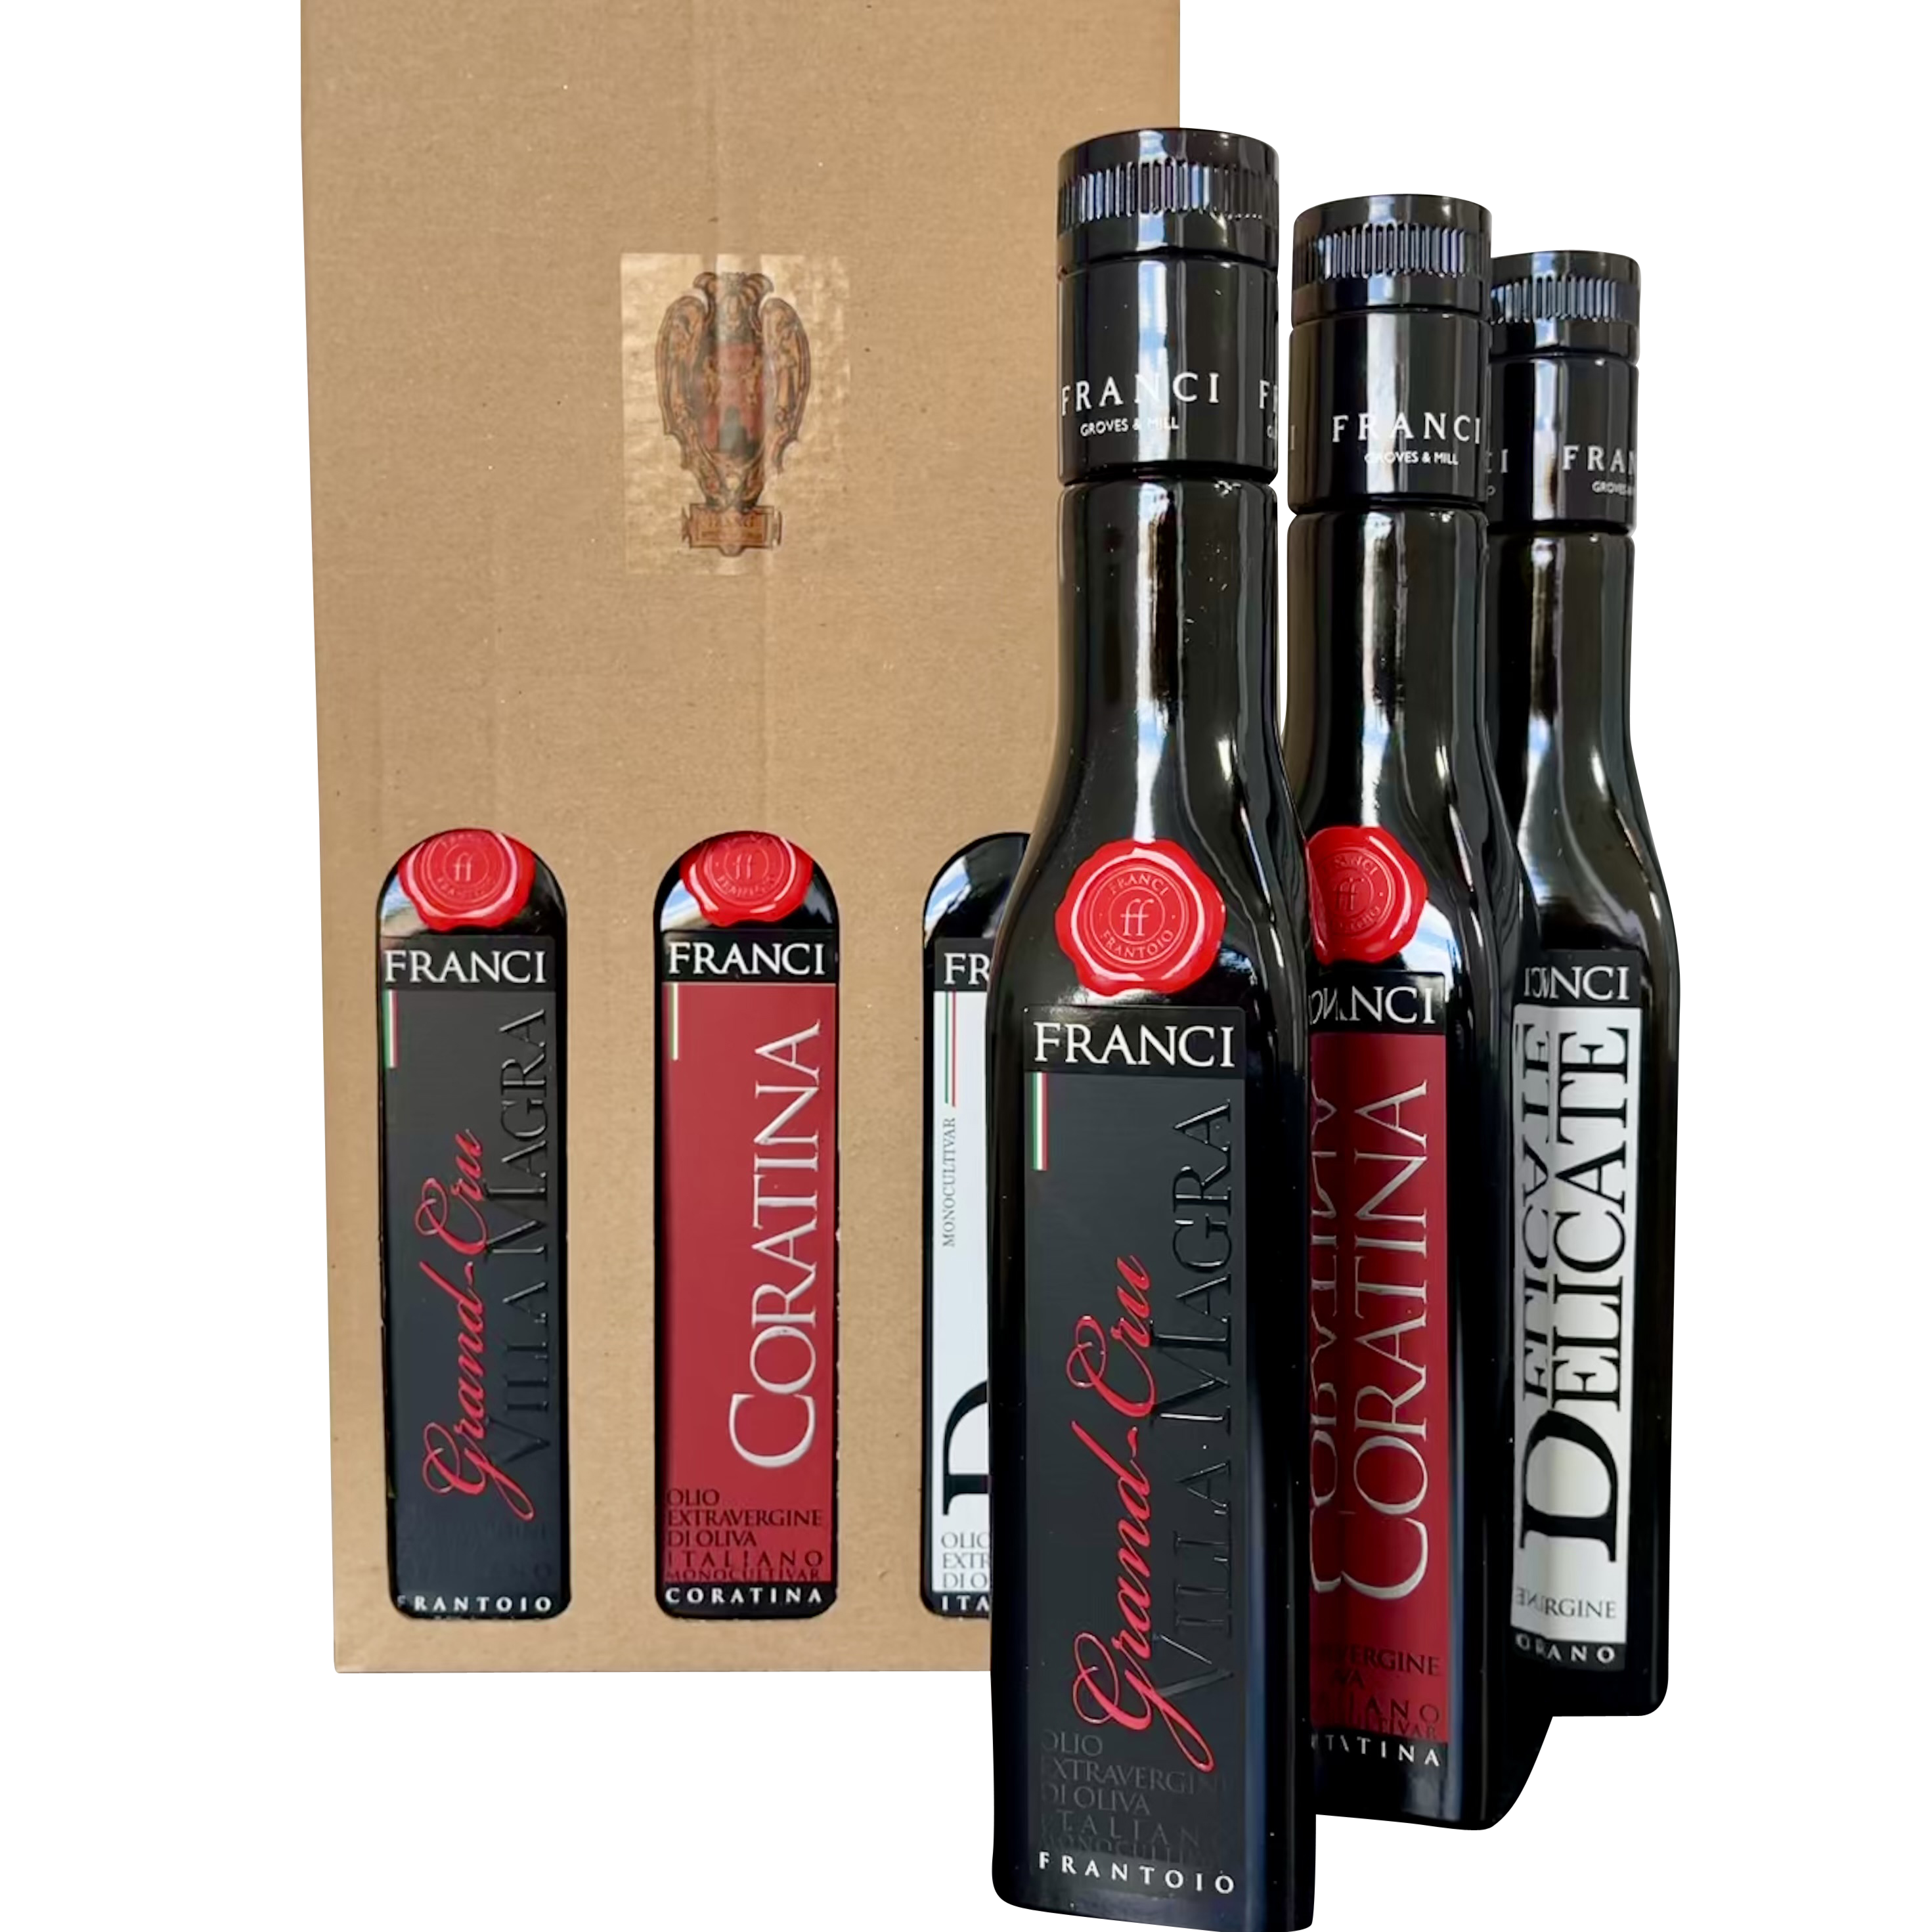 Frantoio Franci Gift Olio2go Box (3 bottles) Gift Set – in